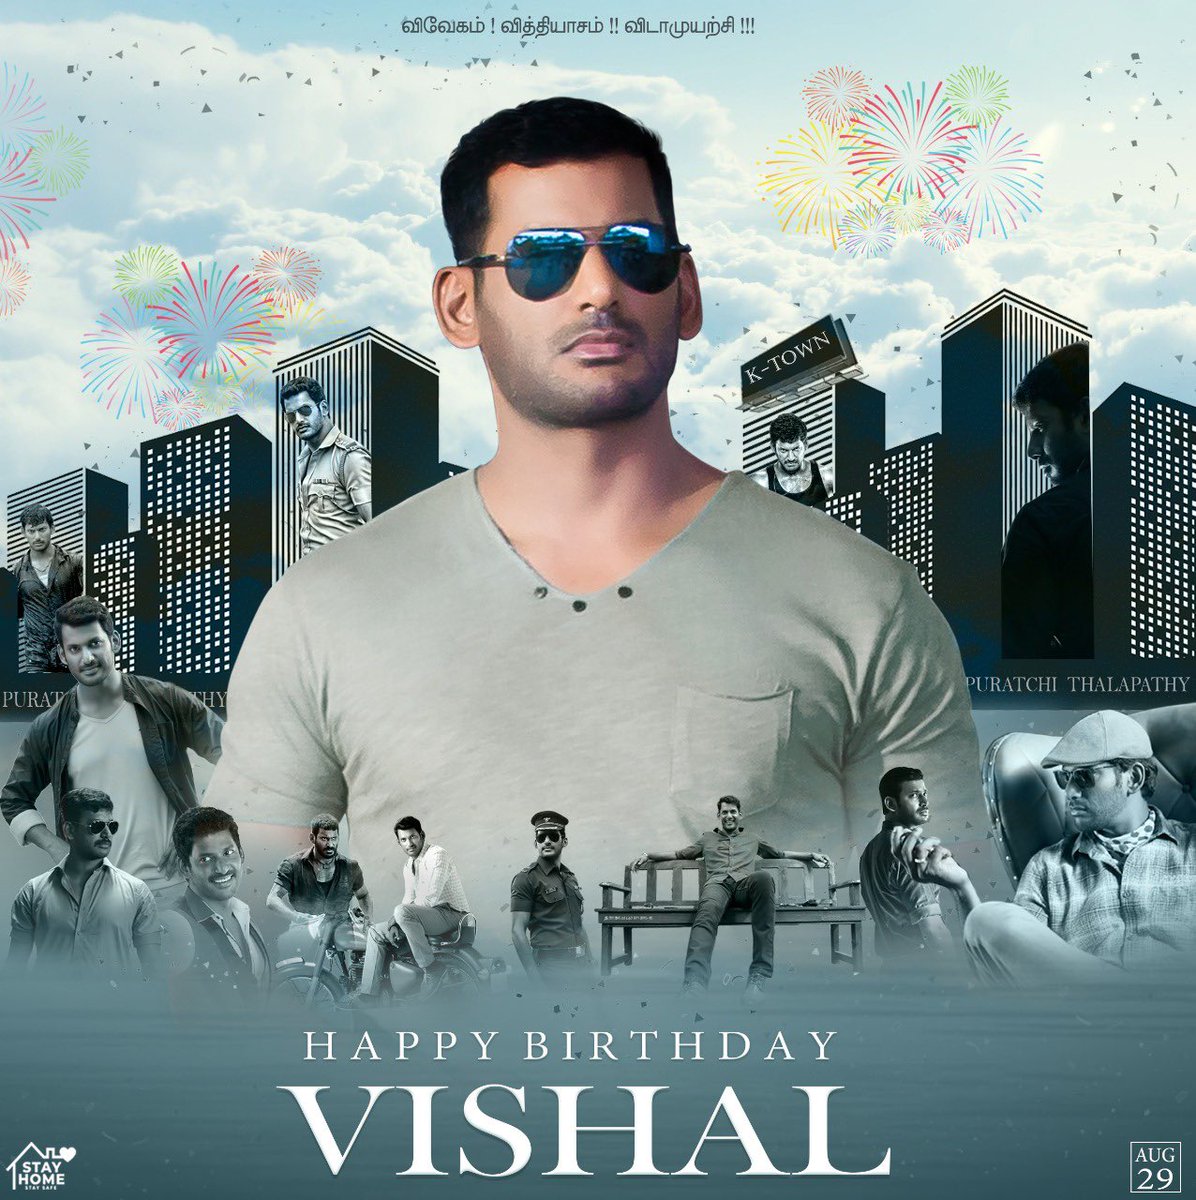 Here is the CDP of Vishal bday

#VishalBdayCDP #HappyBirthdayVishal 
#Vishal